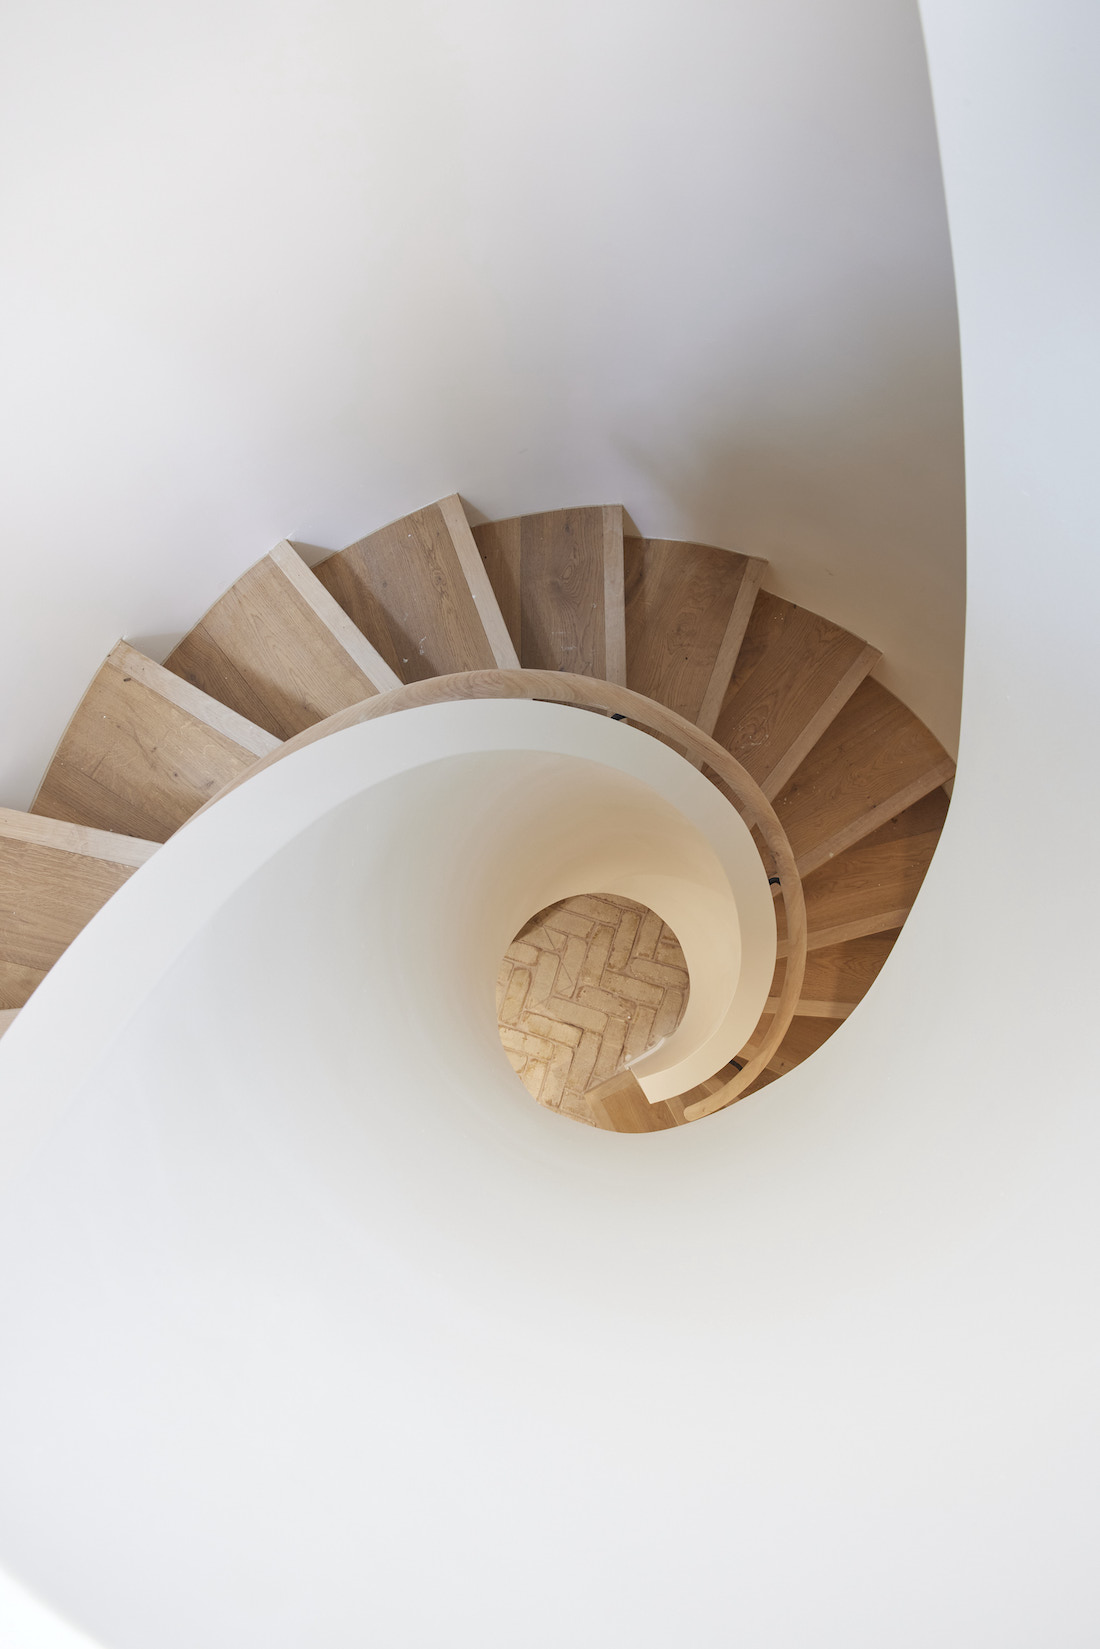 Spiral staircase birds eye view